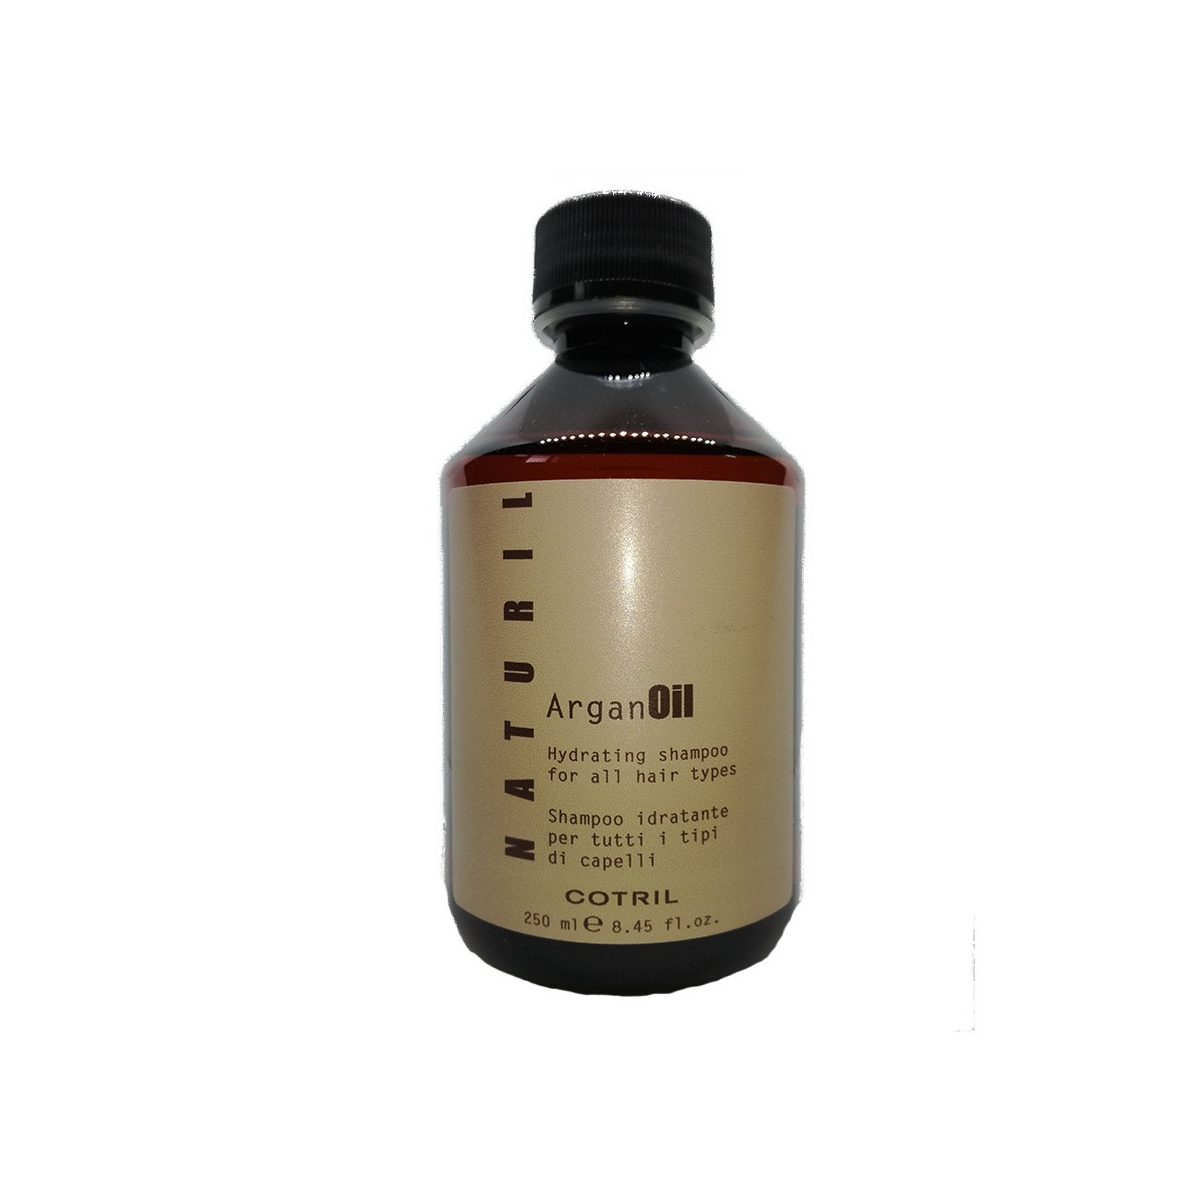 COTRIL - NATURIL ARGAN OIL - Hydrating shampoo (250ml) Shampoo idratante